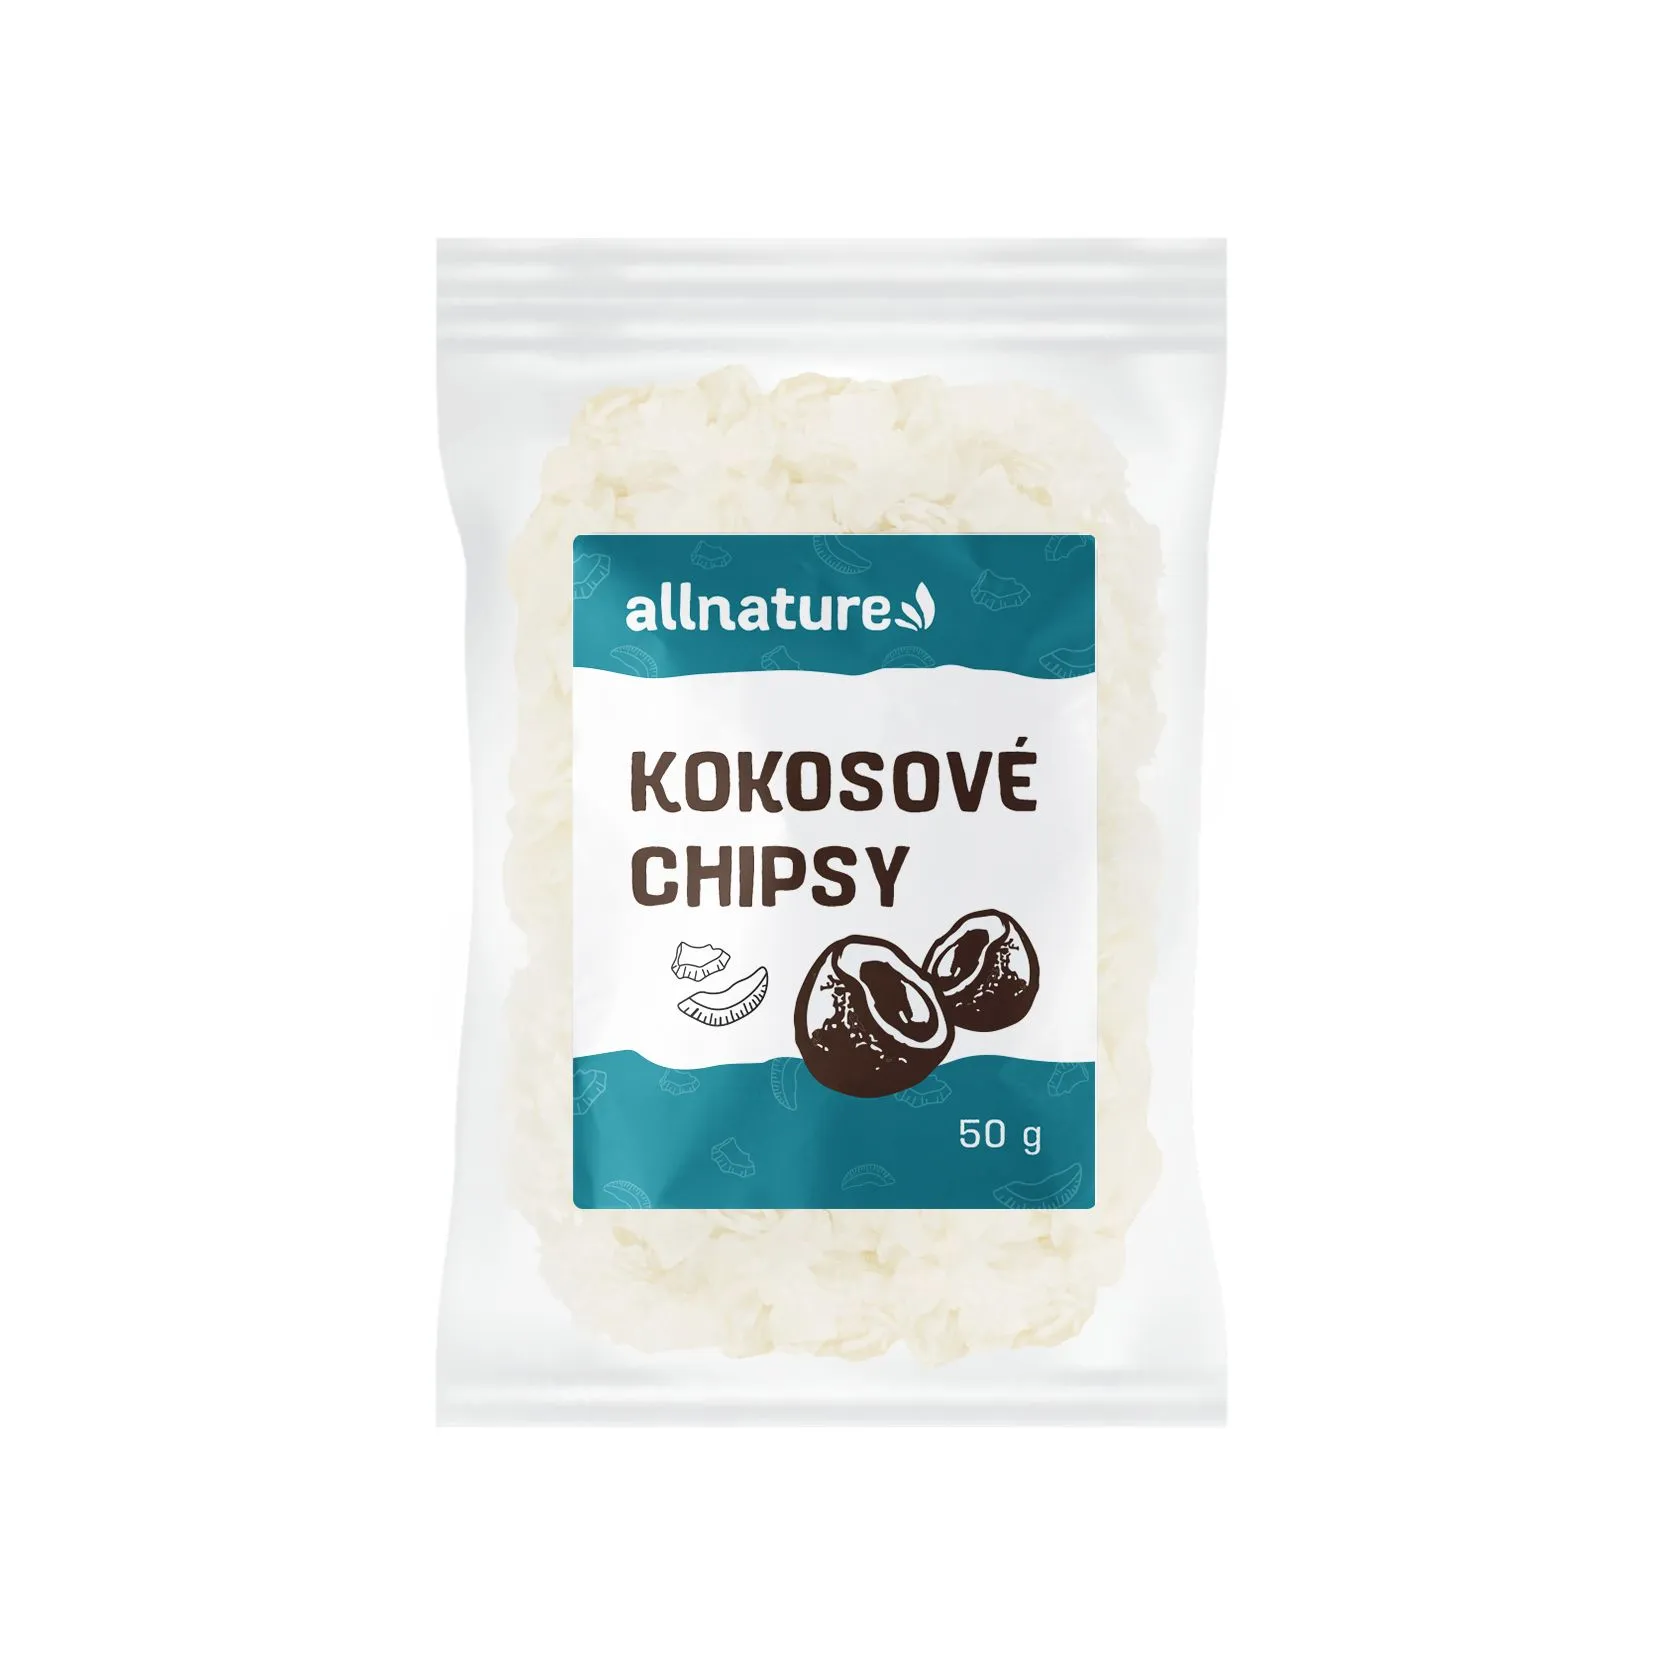 Allnature Kokosove Chipsy 1×50 g, kokosové chipsy